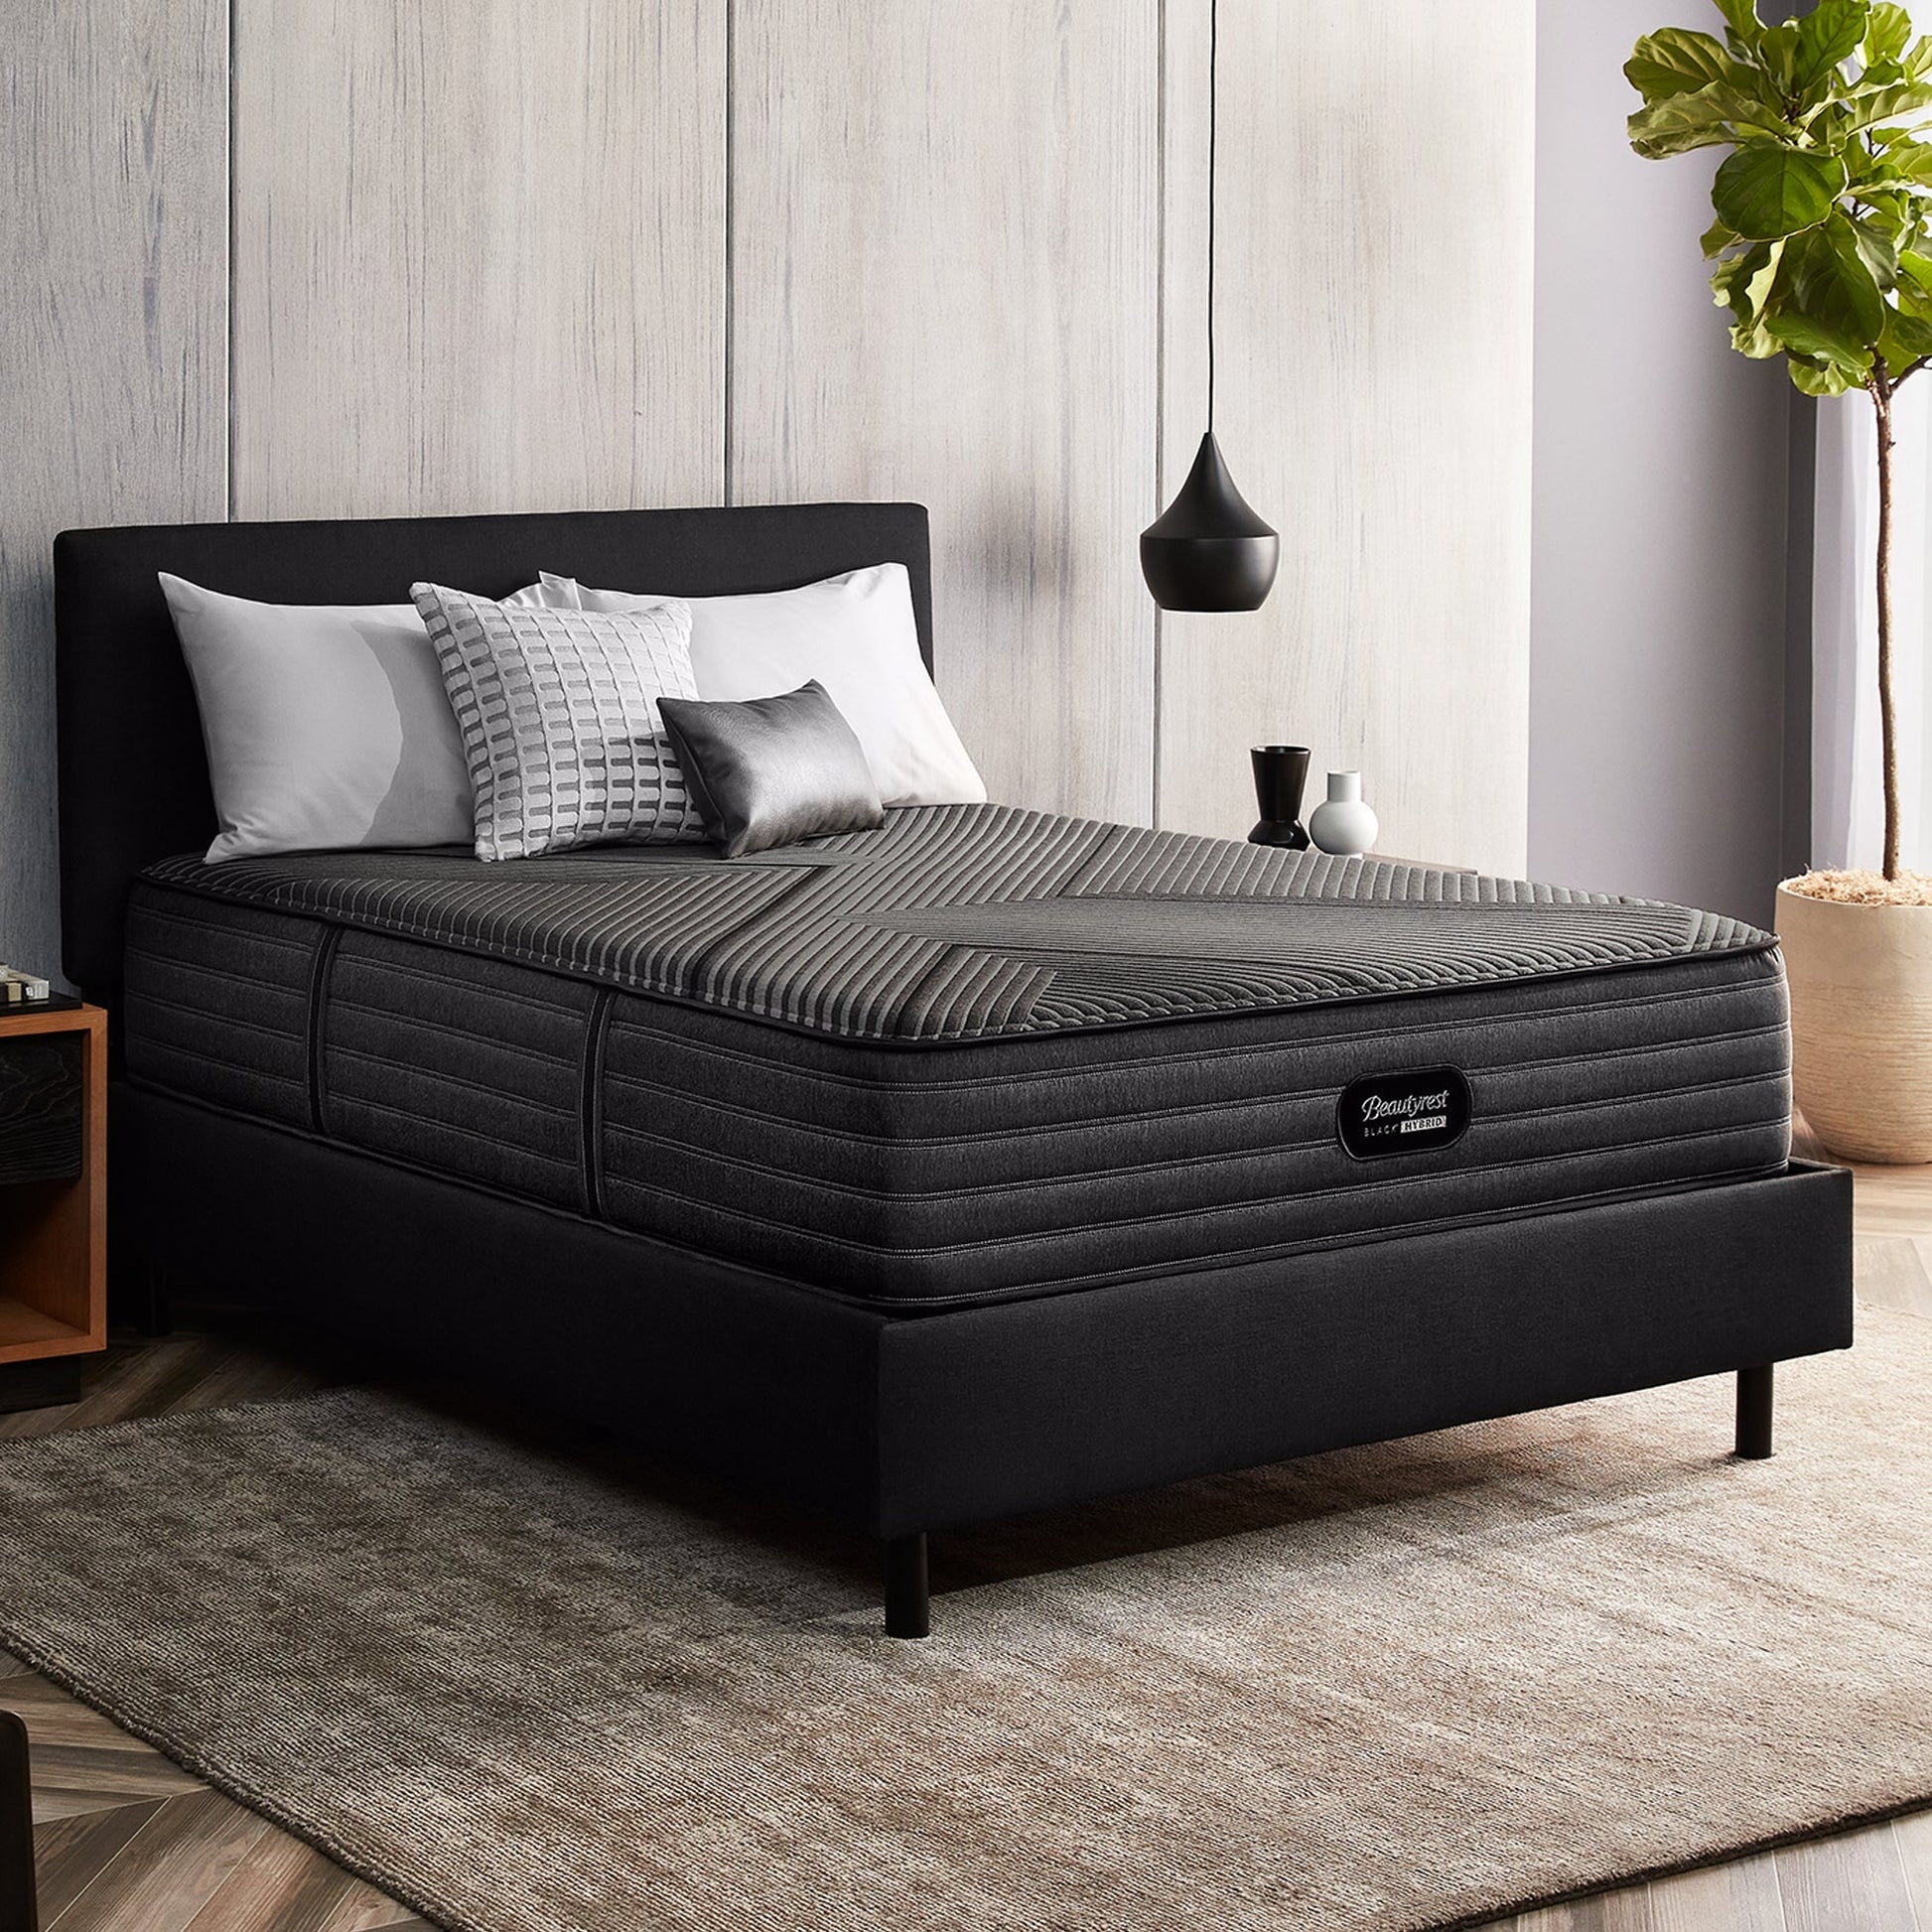 Beautyrest Black Hybrid L-Class Firm Mattress On Bed Frame In Bedroom